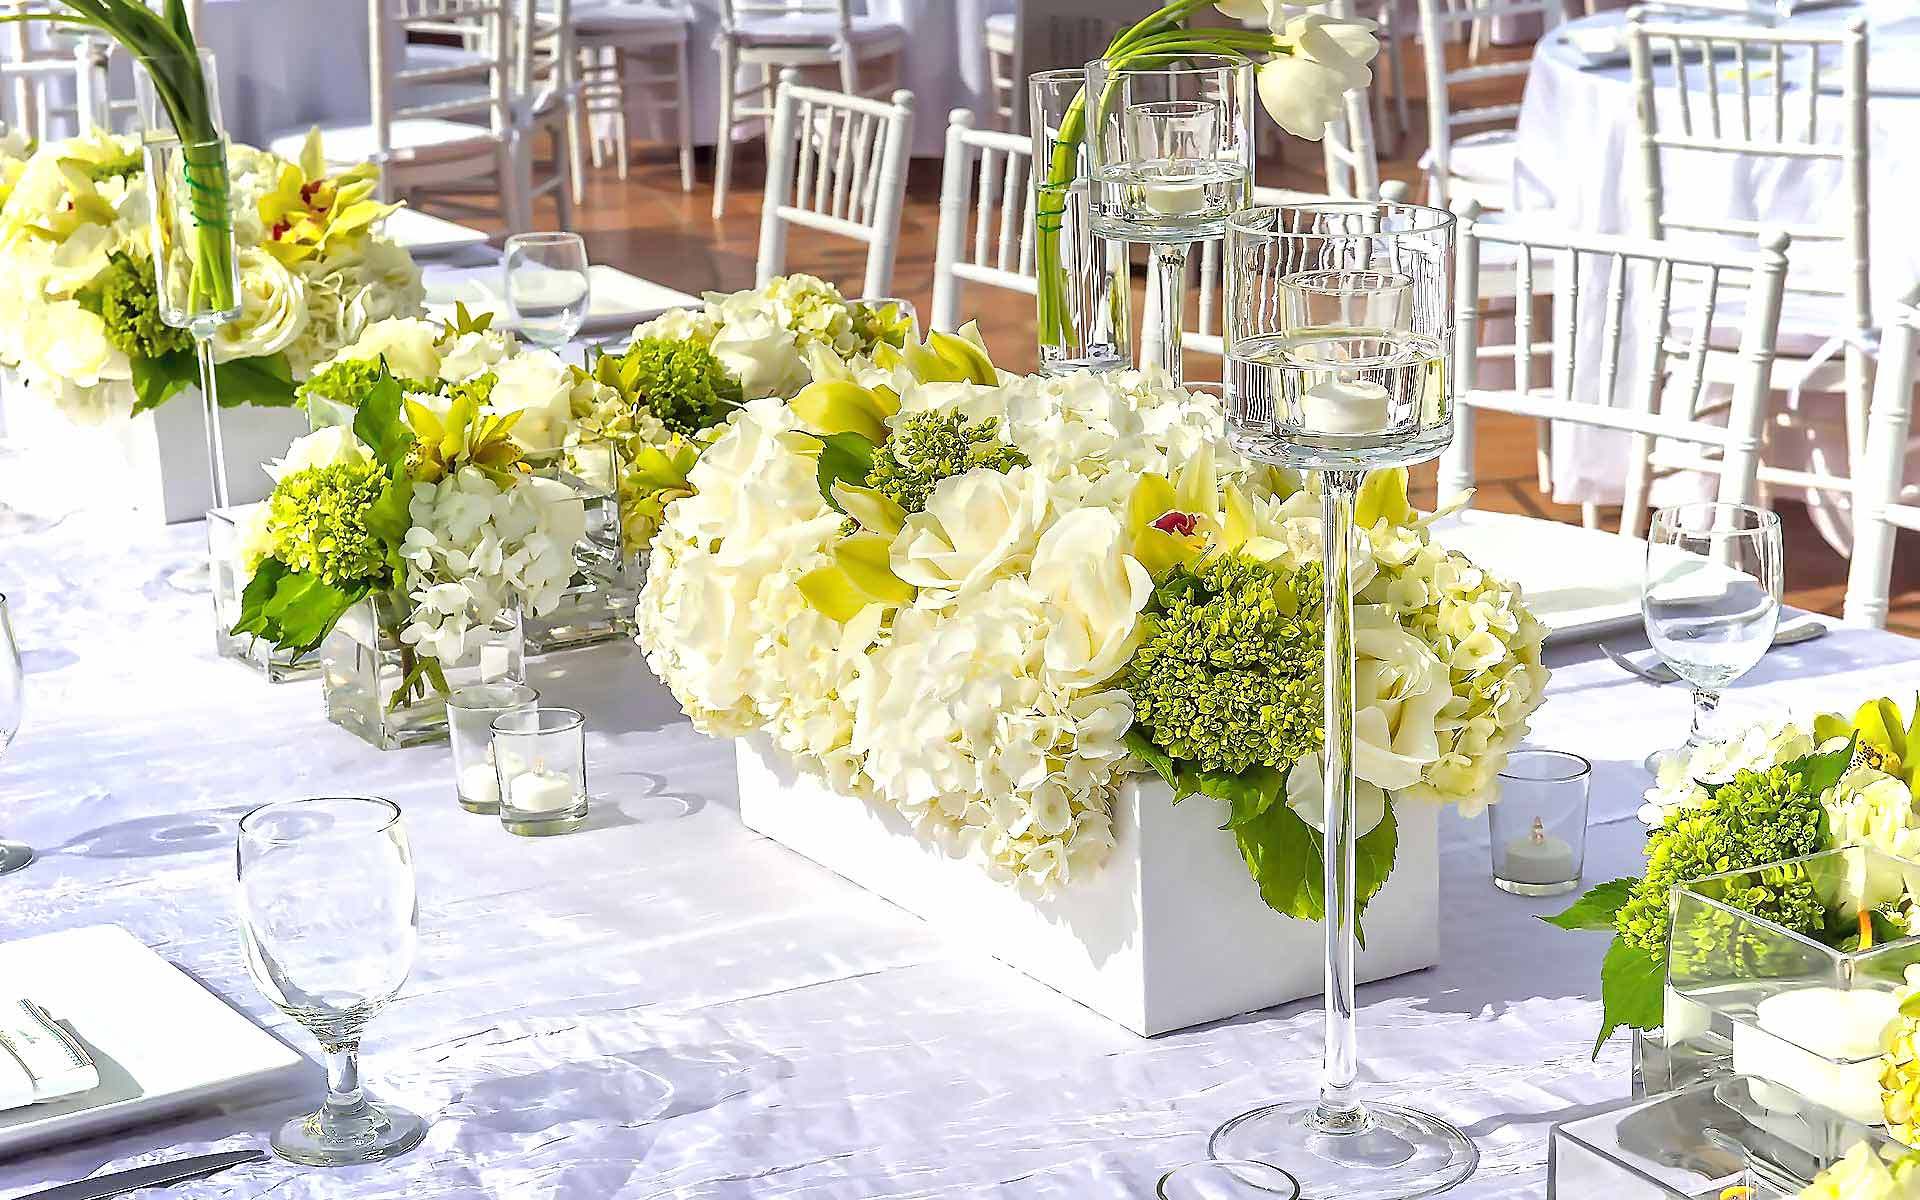 Nice-Flower-Arrangement-Set-Up-In-A-Wedding-Reception-Table